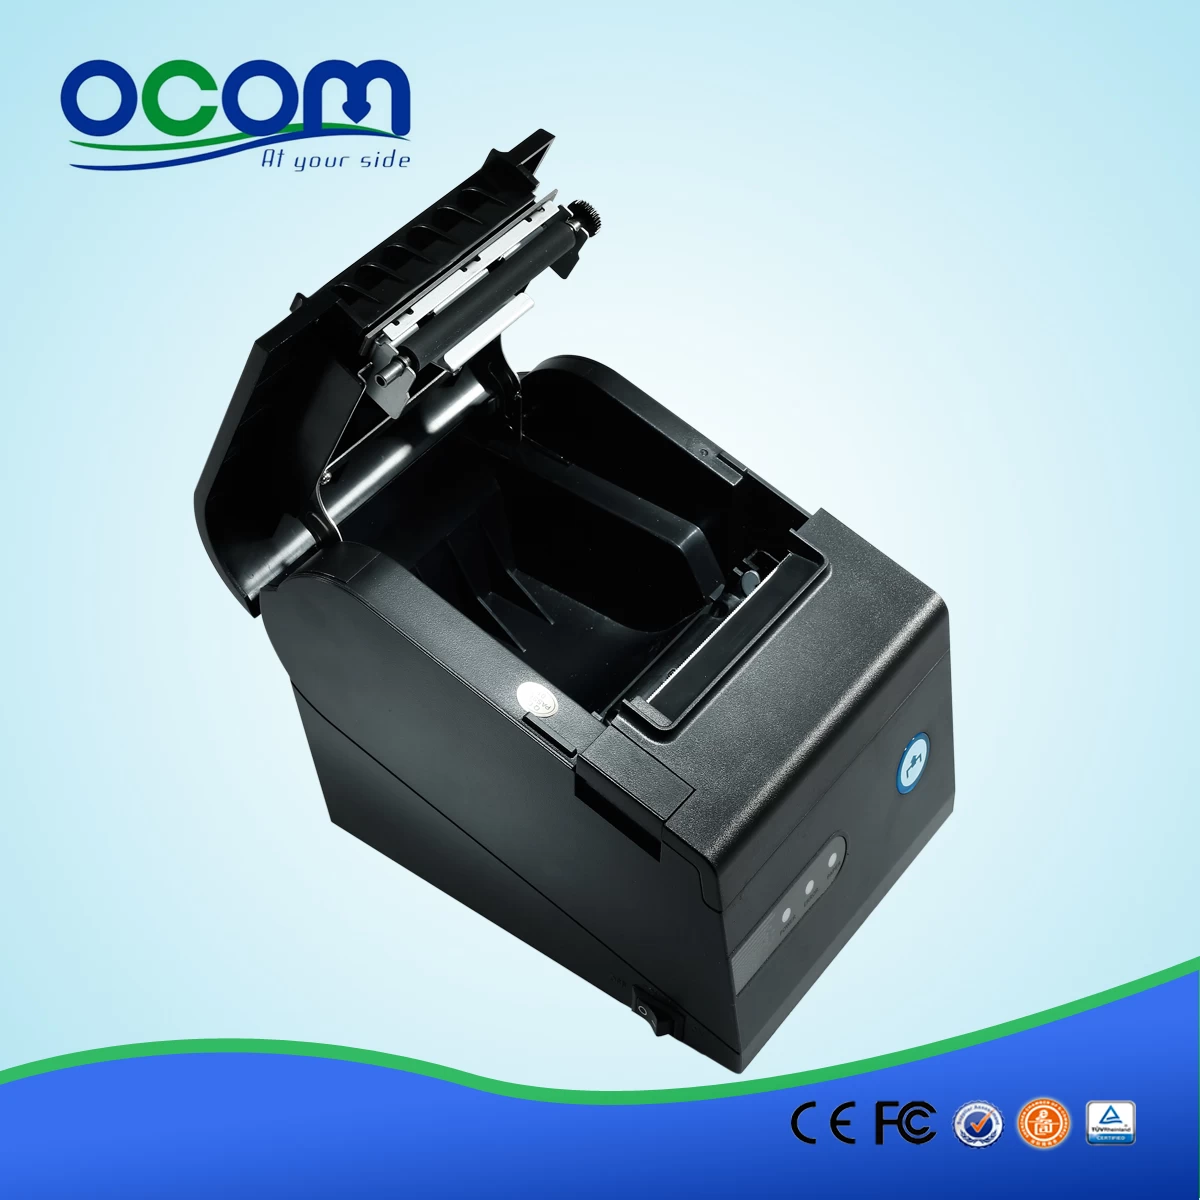 Thermal Printer 80mm auto cutter OCPP-804